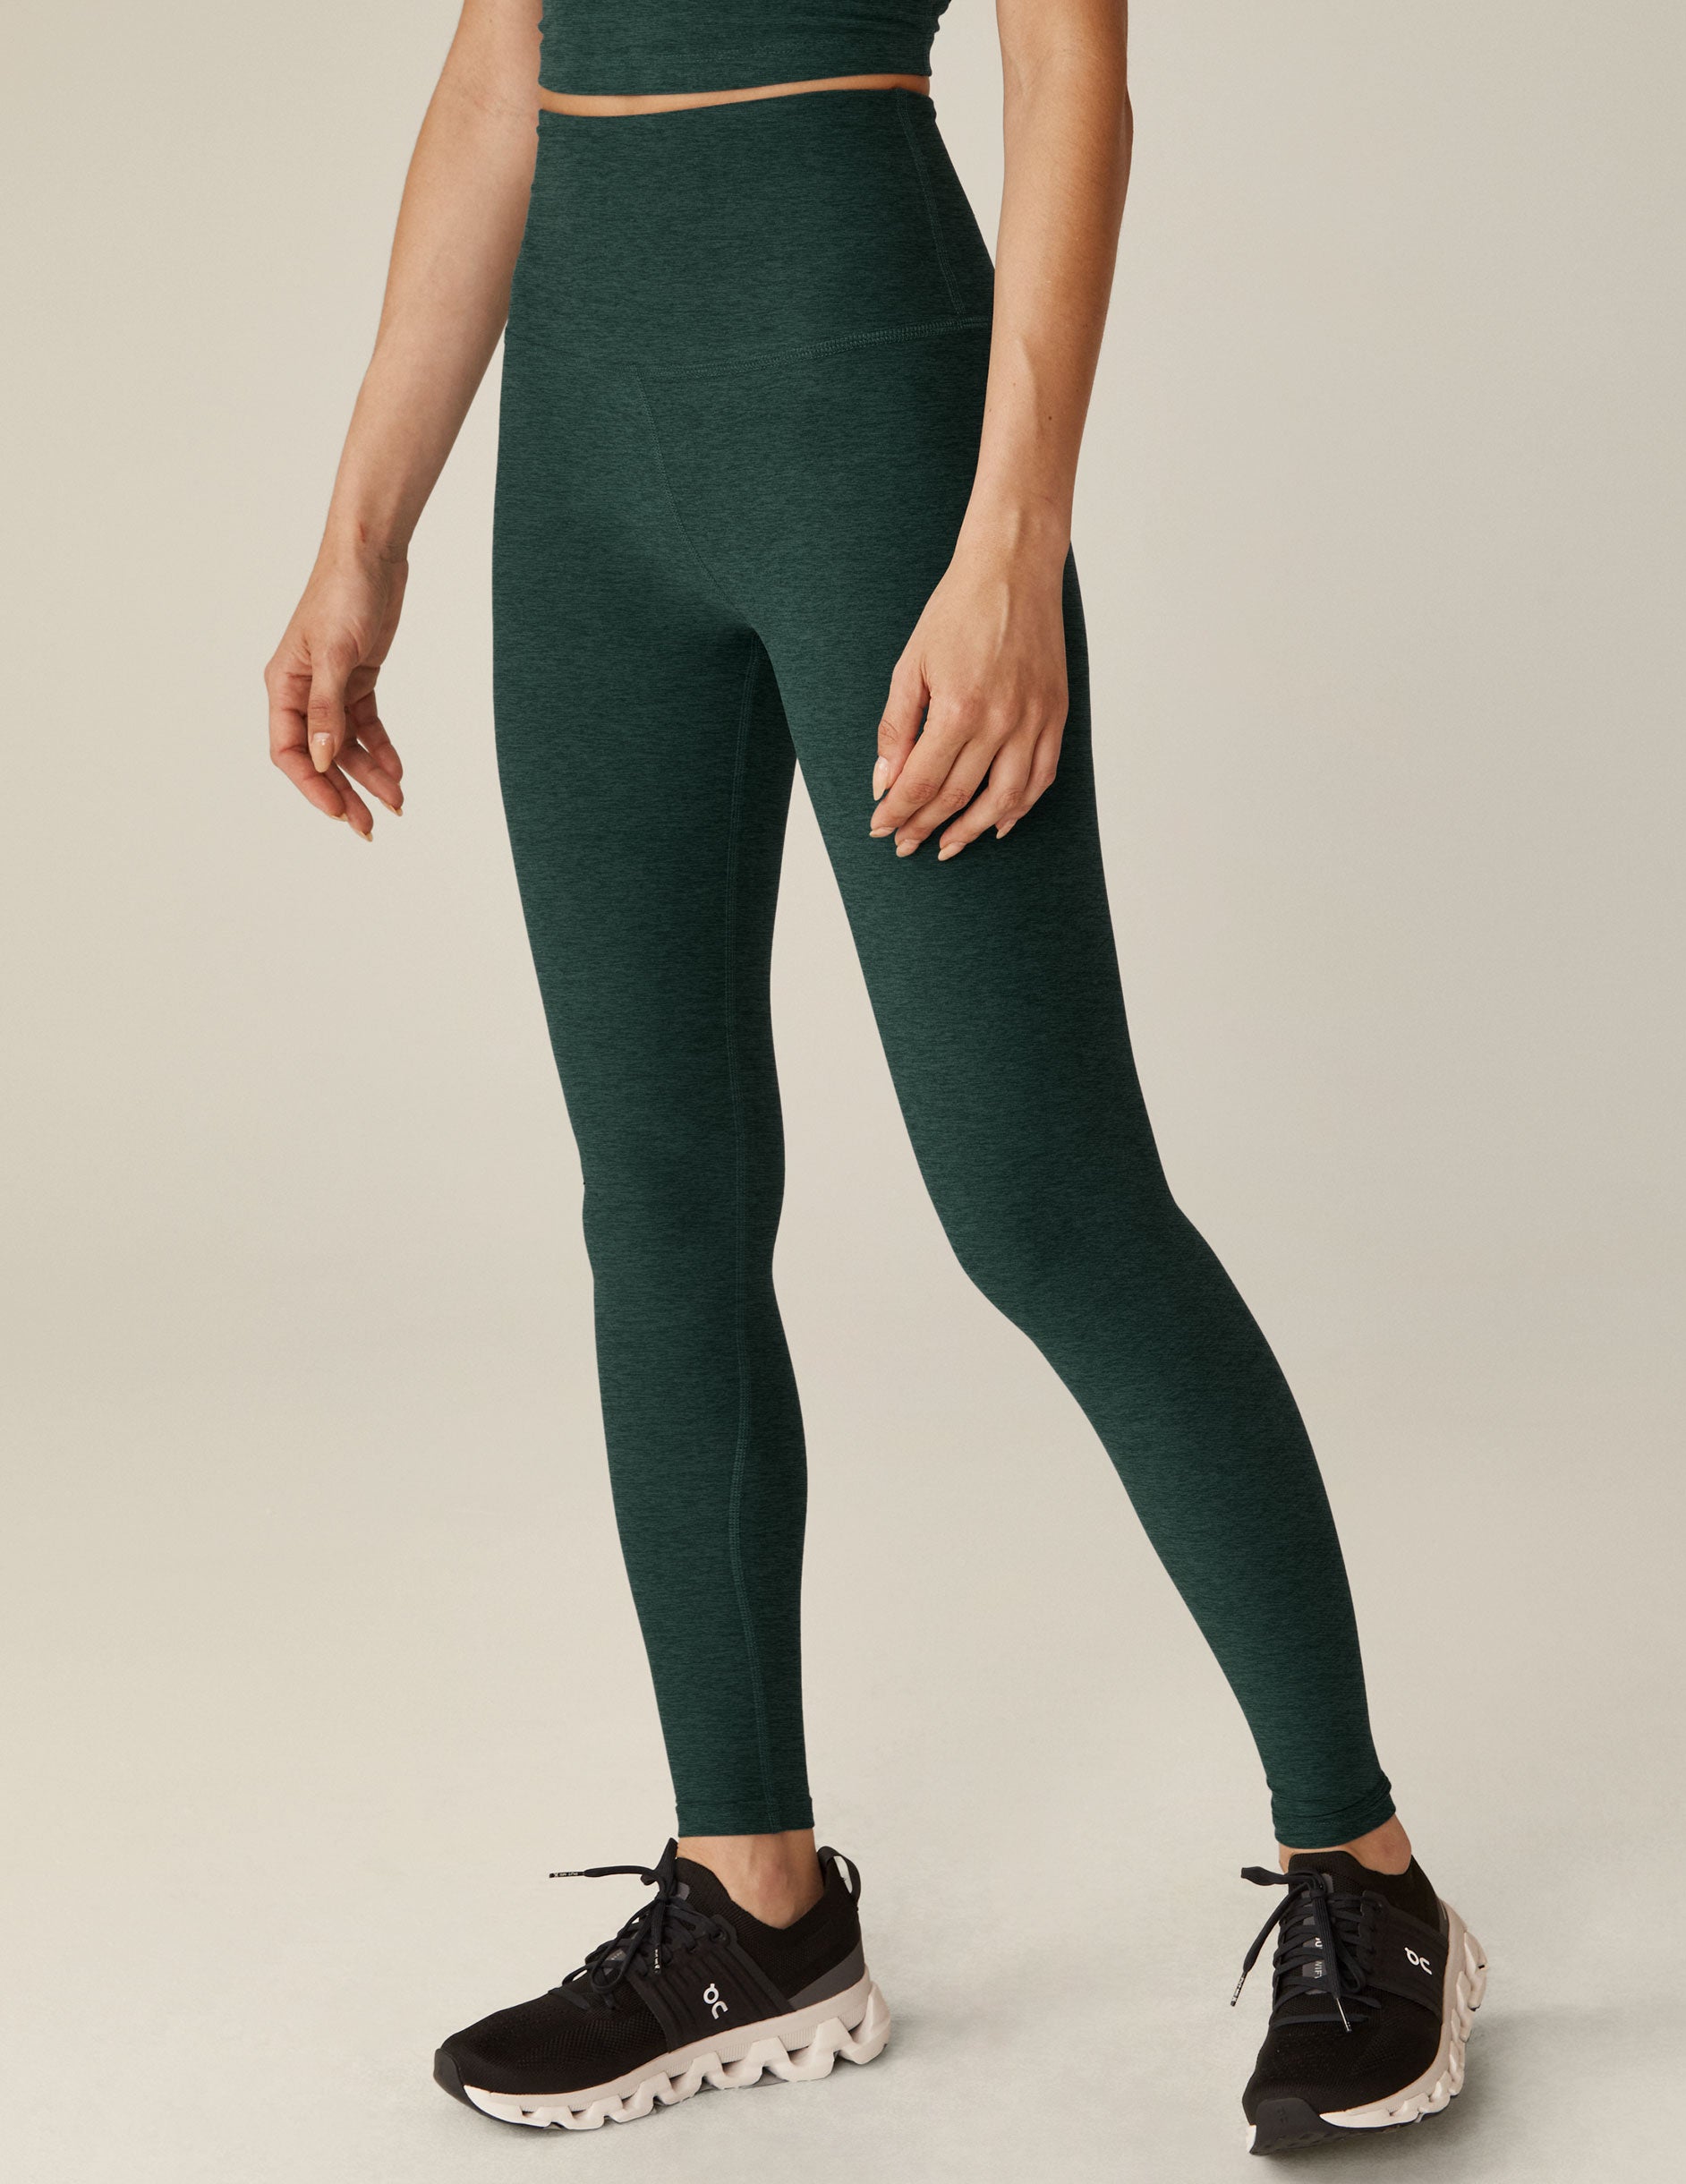 Beyond Yoga Camo Green Leggings Size L - 60% off